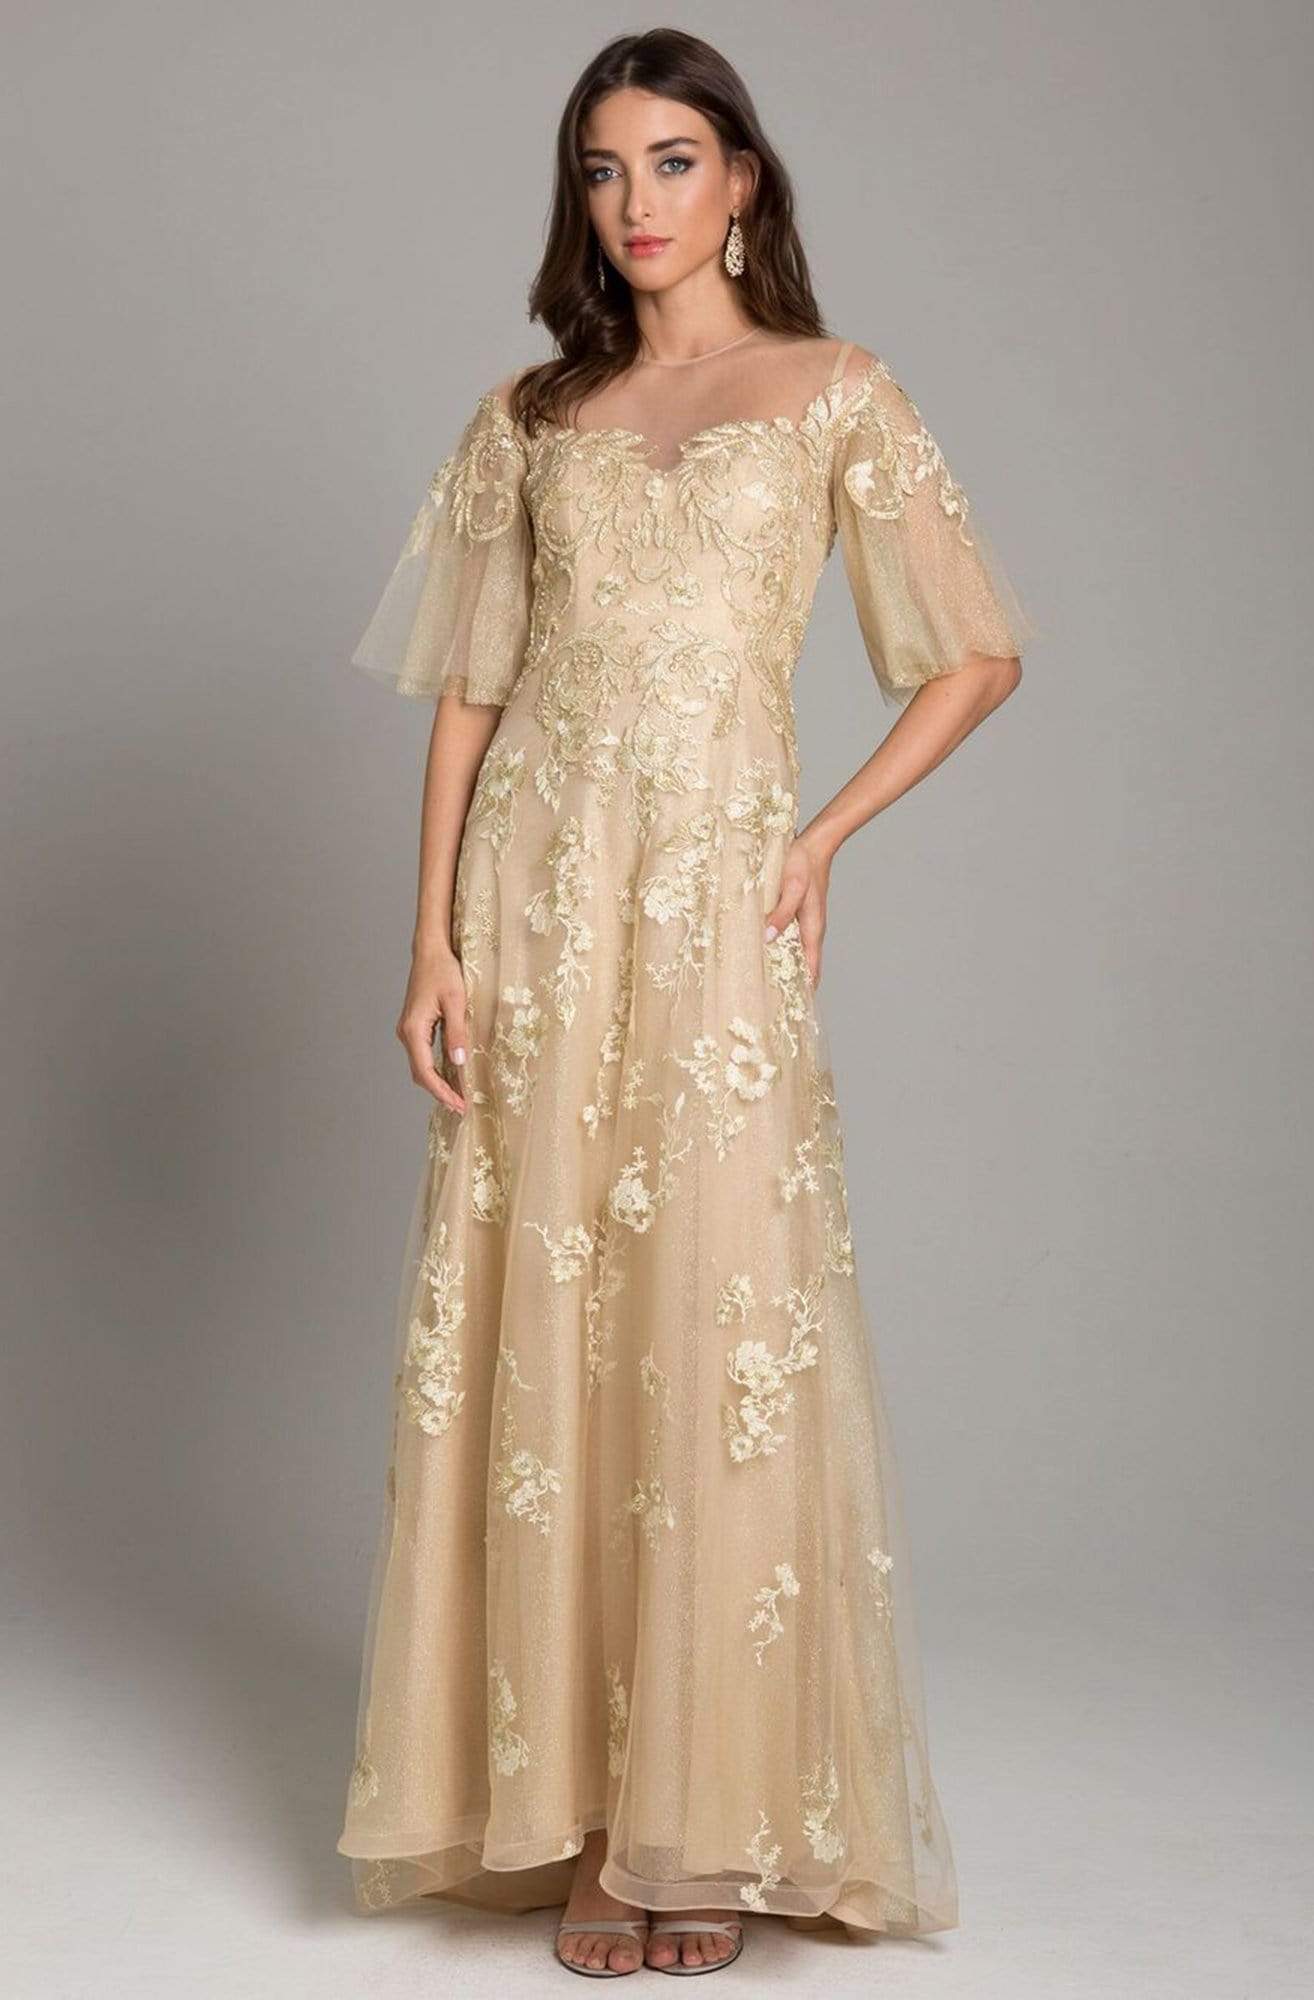 Lara Dresses - 29854 Applique Jewel Neck Tulle A-line Dress Special Occasion Dress 4 / Gold